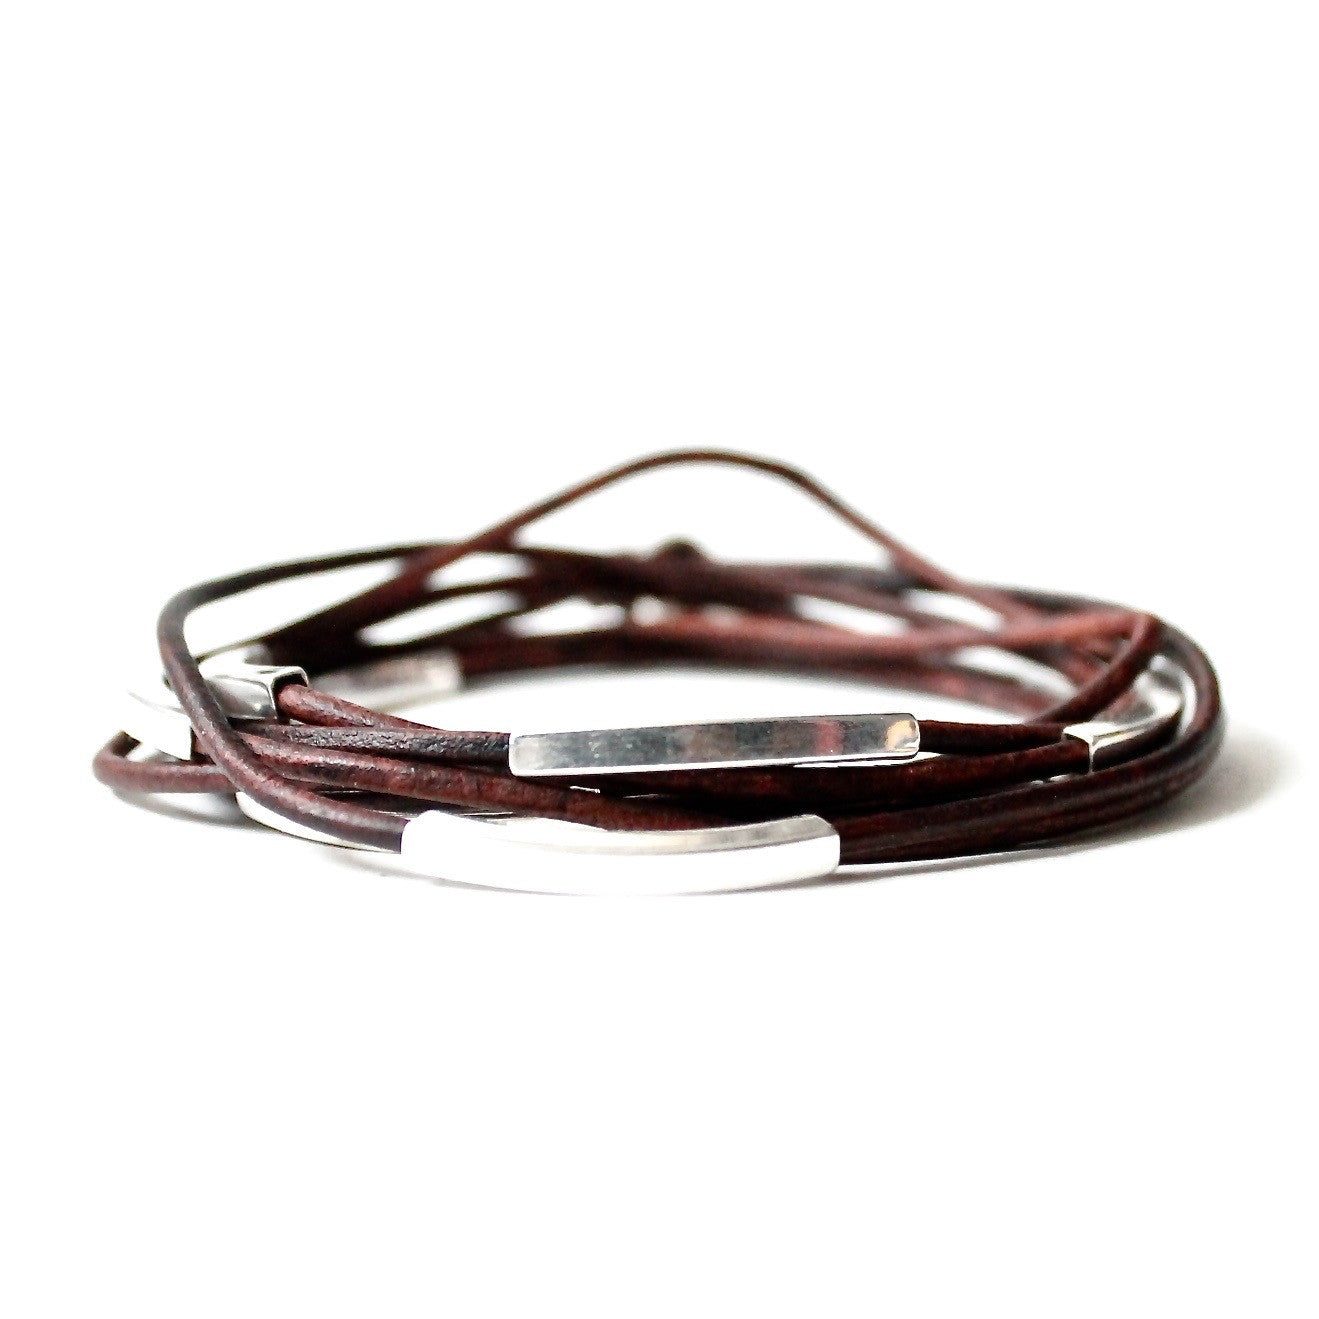 Corso Leather Wrap Bracelet